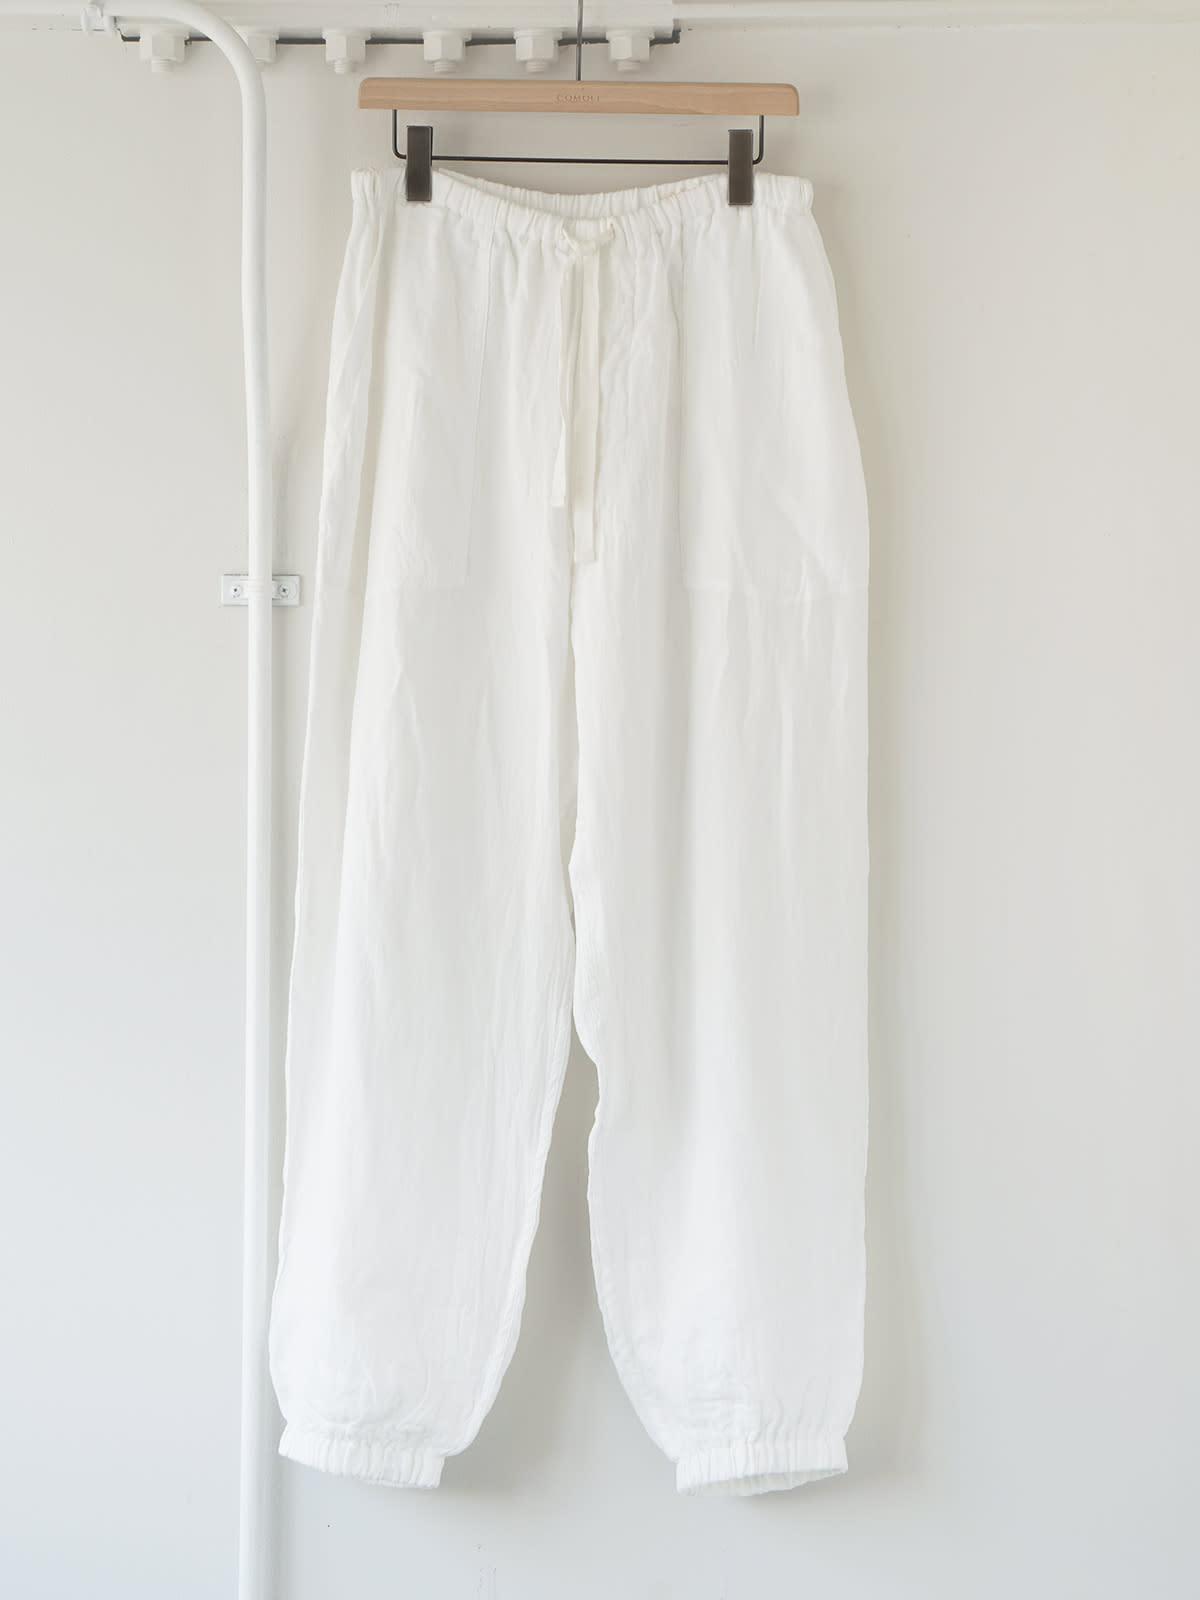 linen double cloth drawstring pants z3